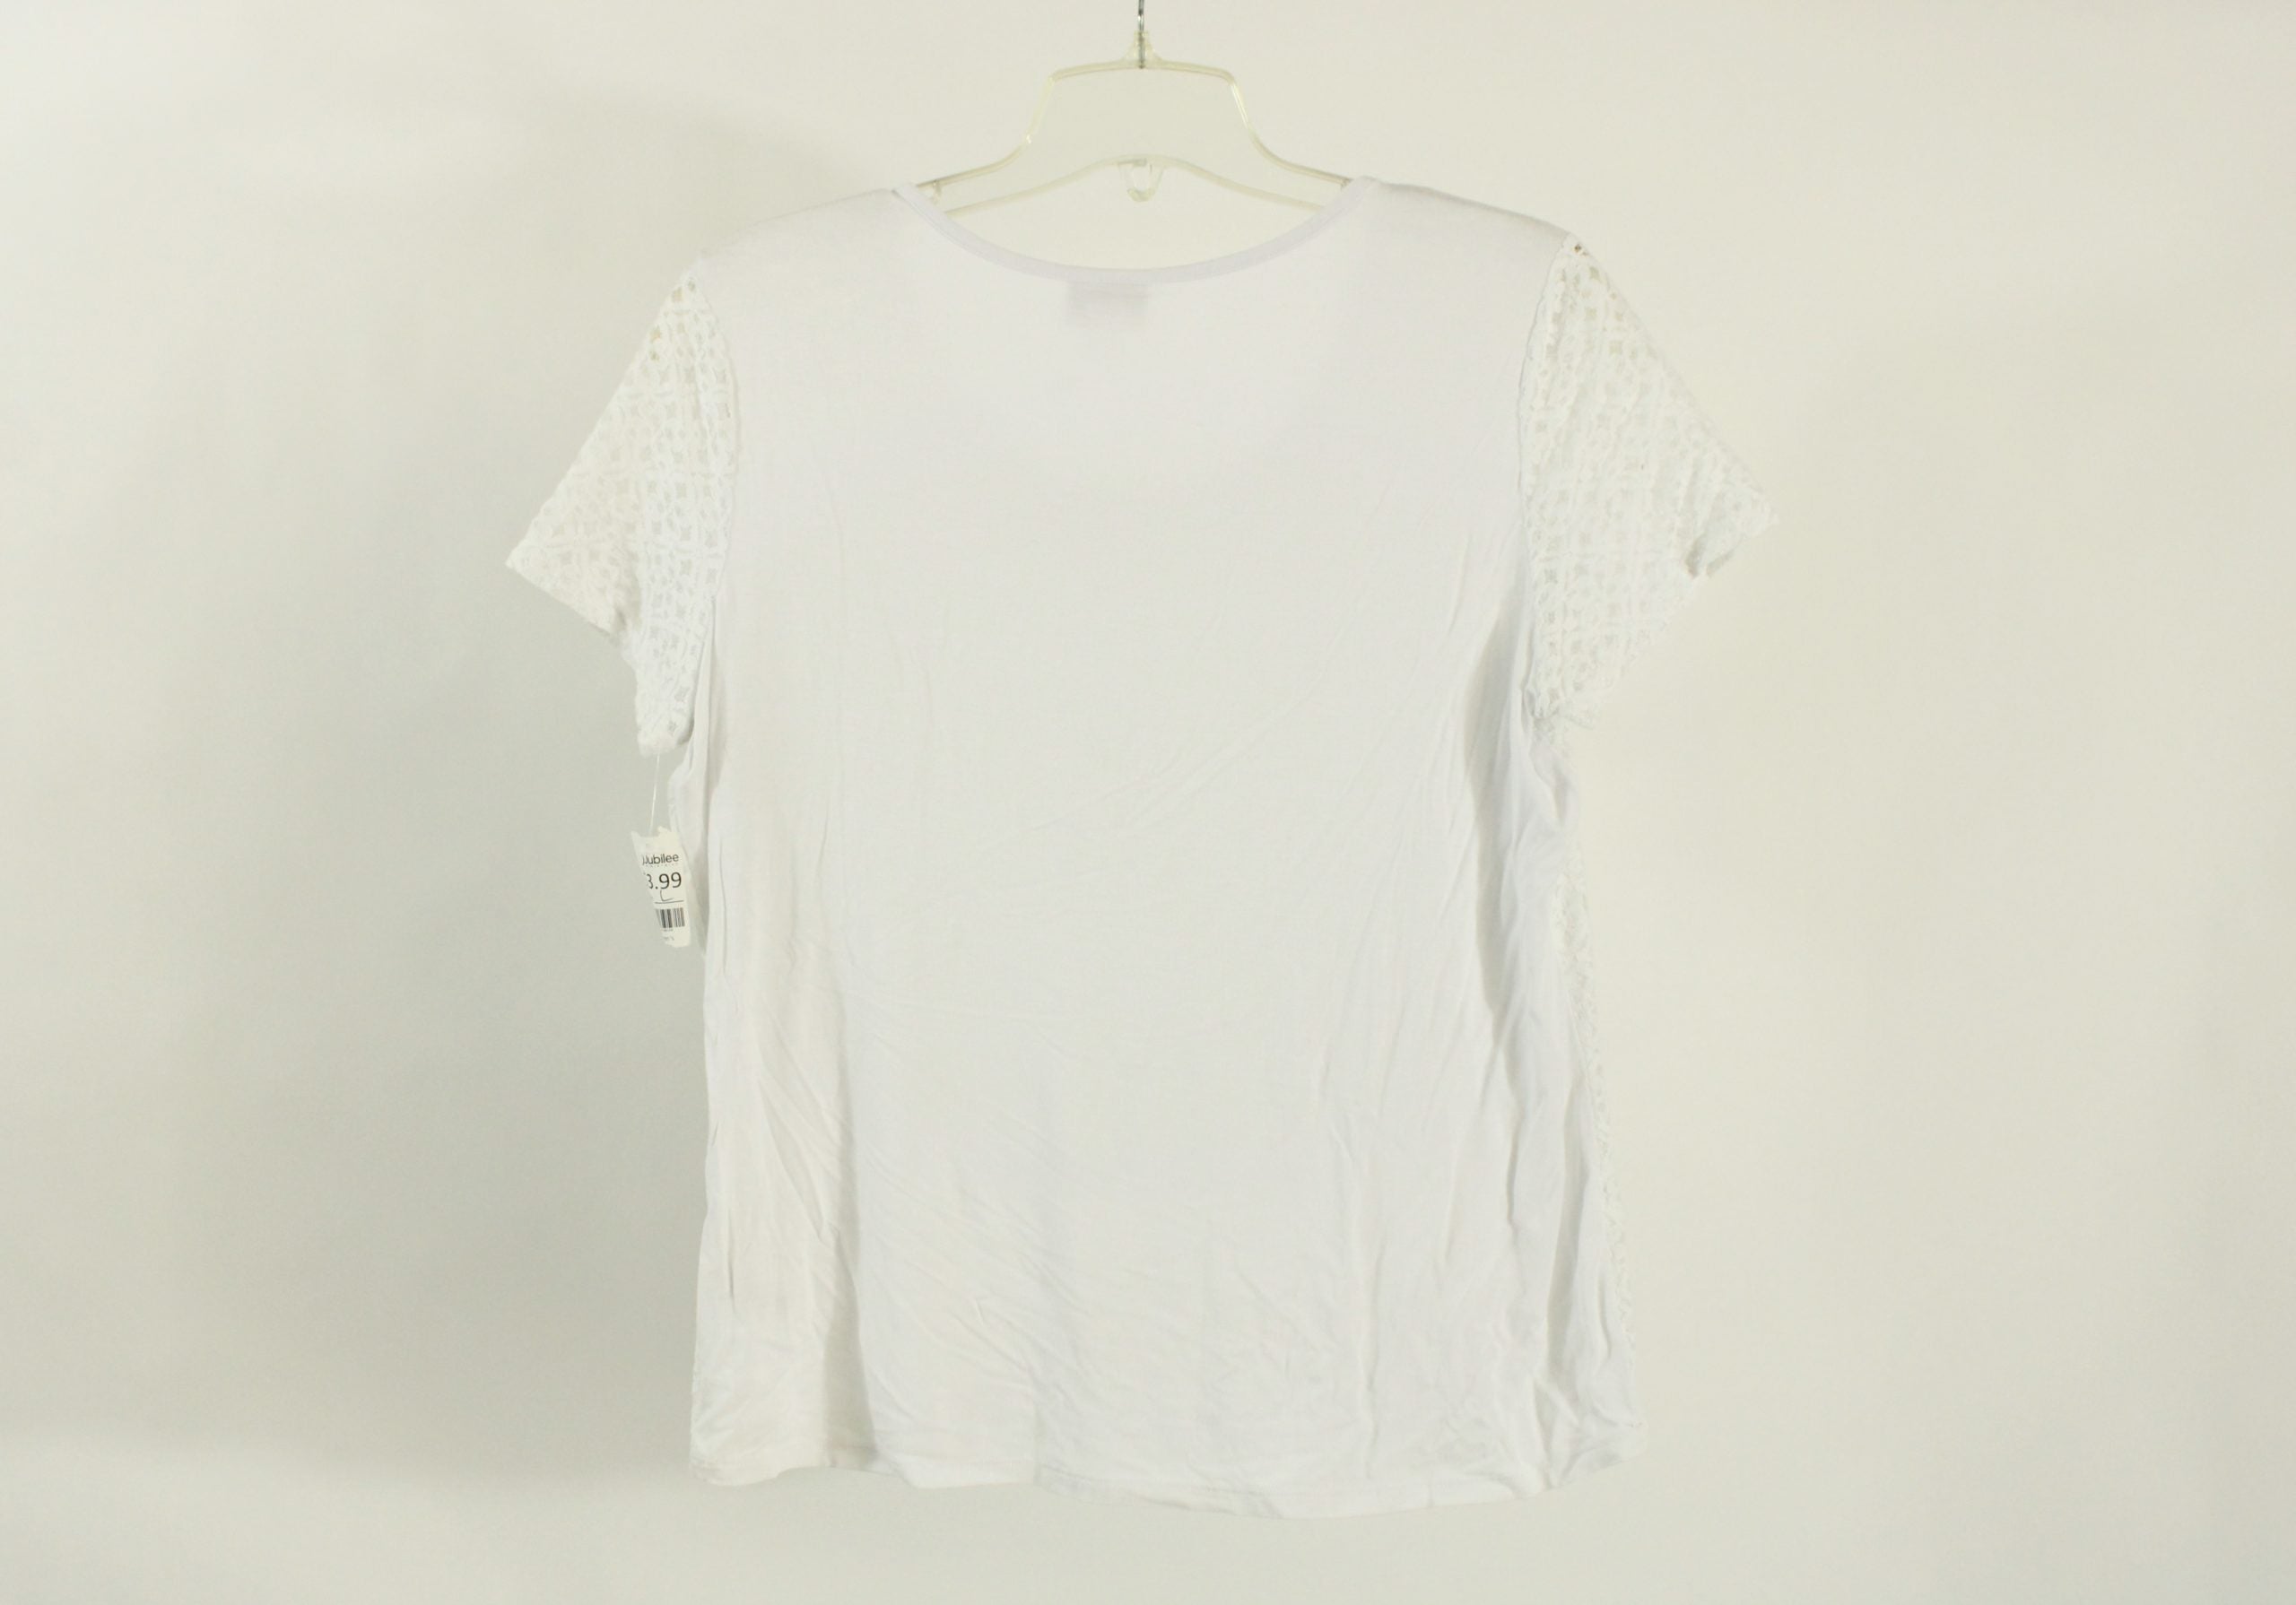 Jaclyn Smith White Lace Shirt | Size L